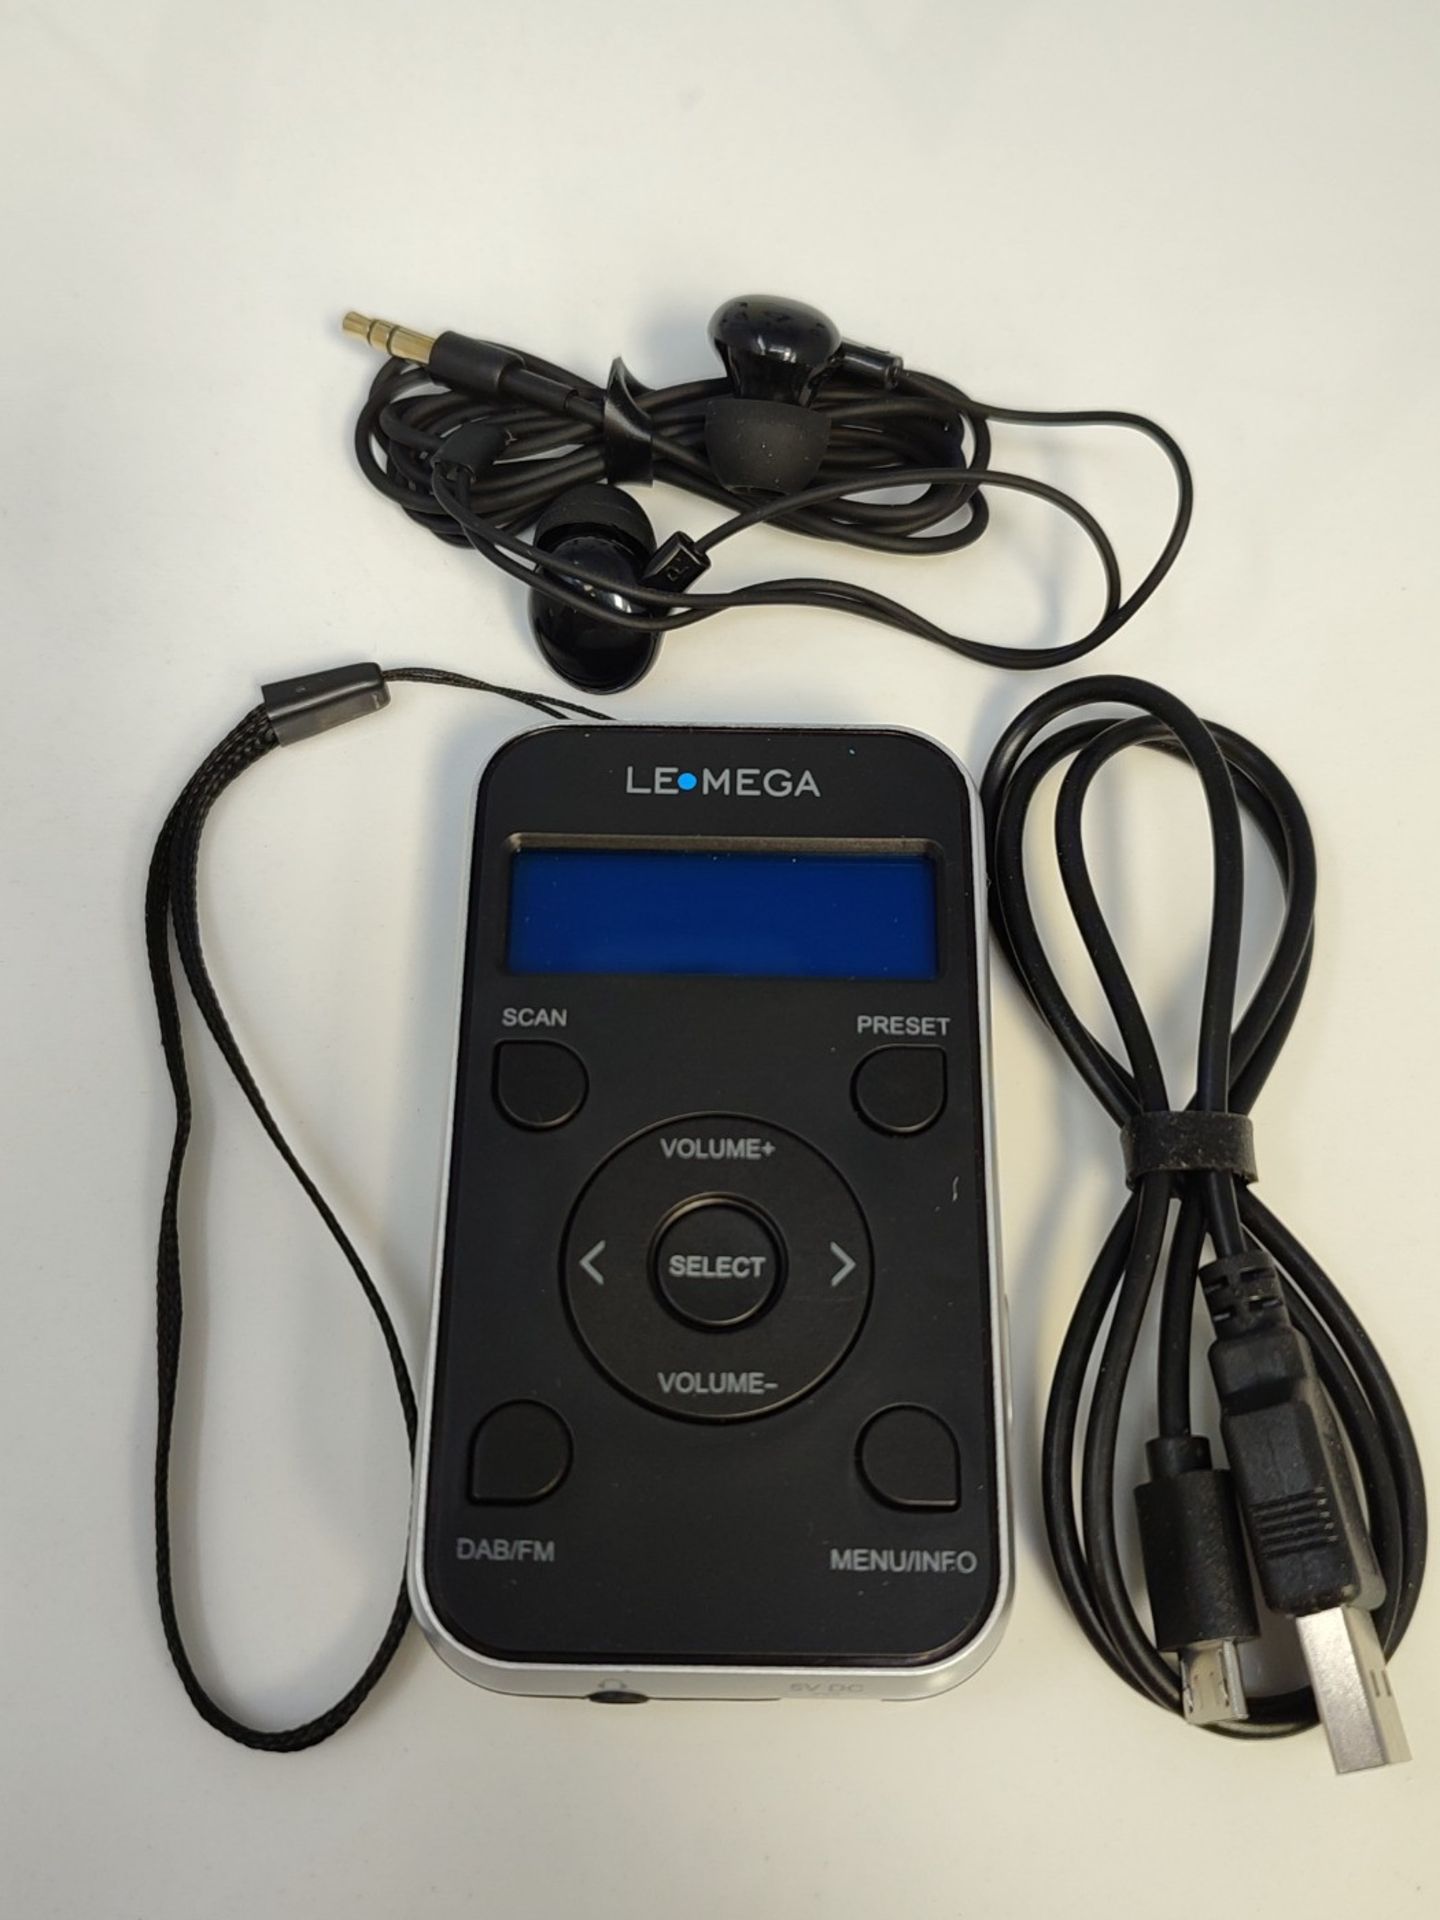 LEMEGA PR1 Pocket Dab/Dab+/FM Radio, Portable Radio with Sporty Design, Includes Earph - Image 4 of 4